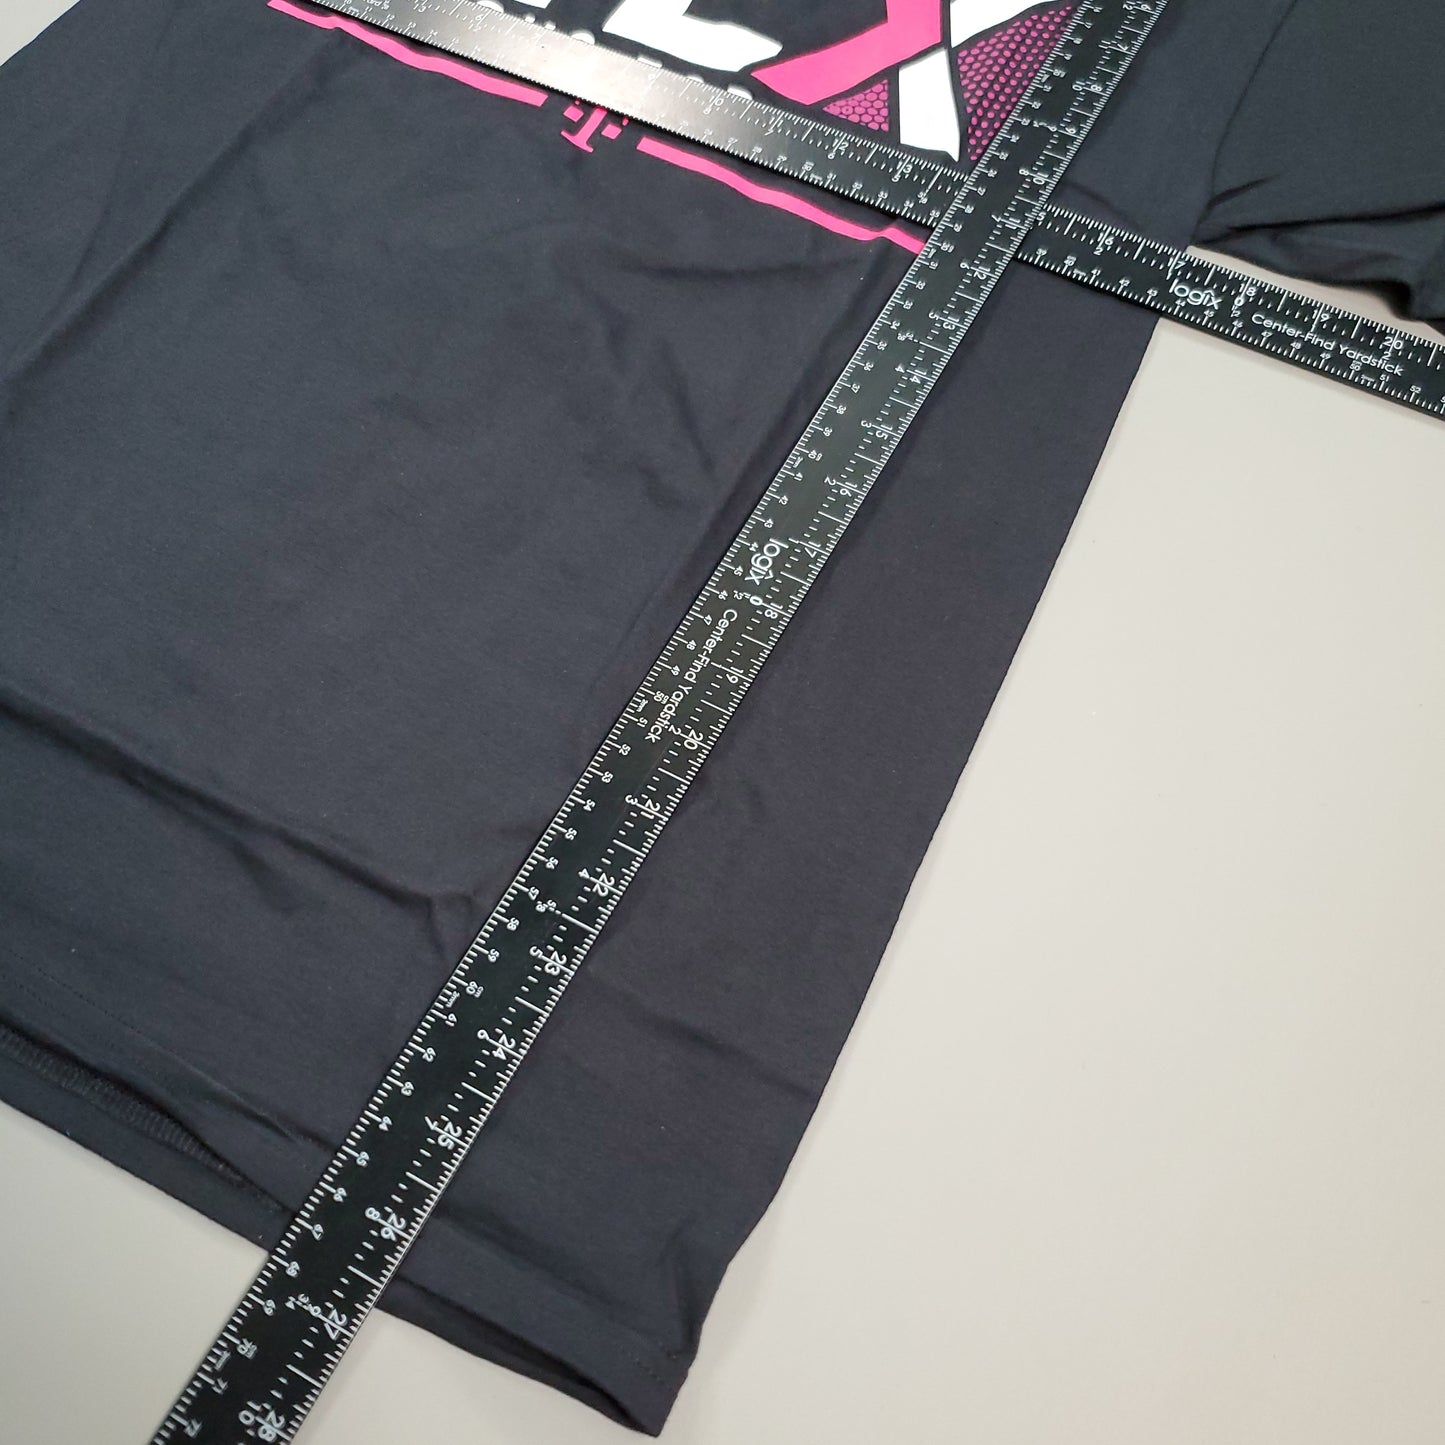 T-MOBILE Tee Shirt Short Sleeve TEX Famous For Care Men's Unisex Sz S Black/Pink (New)